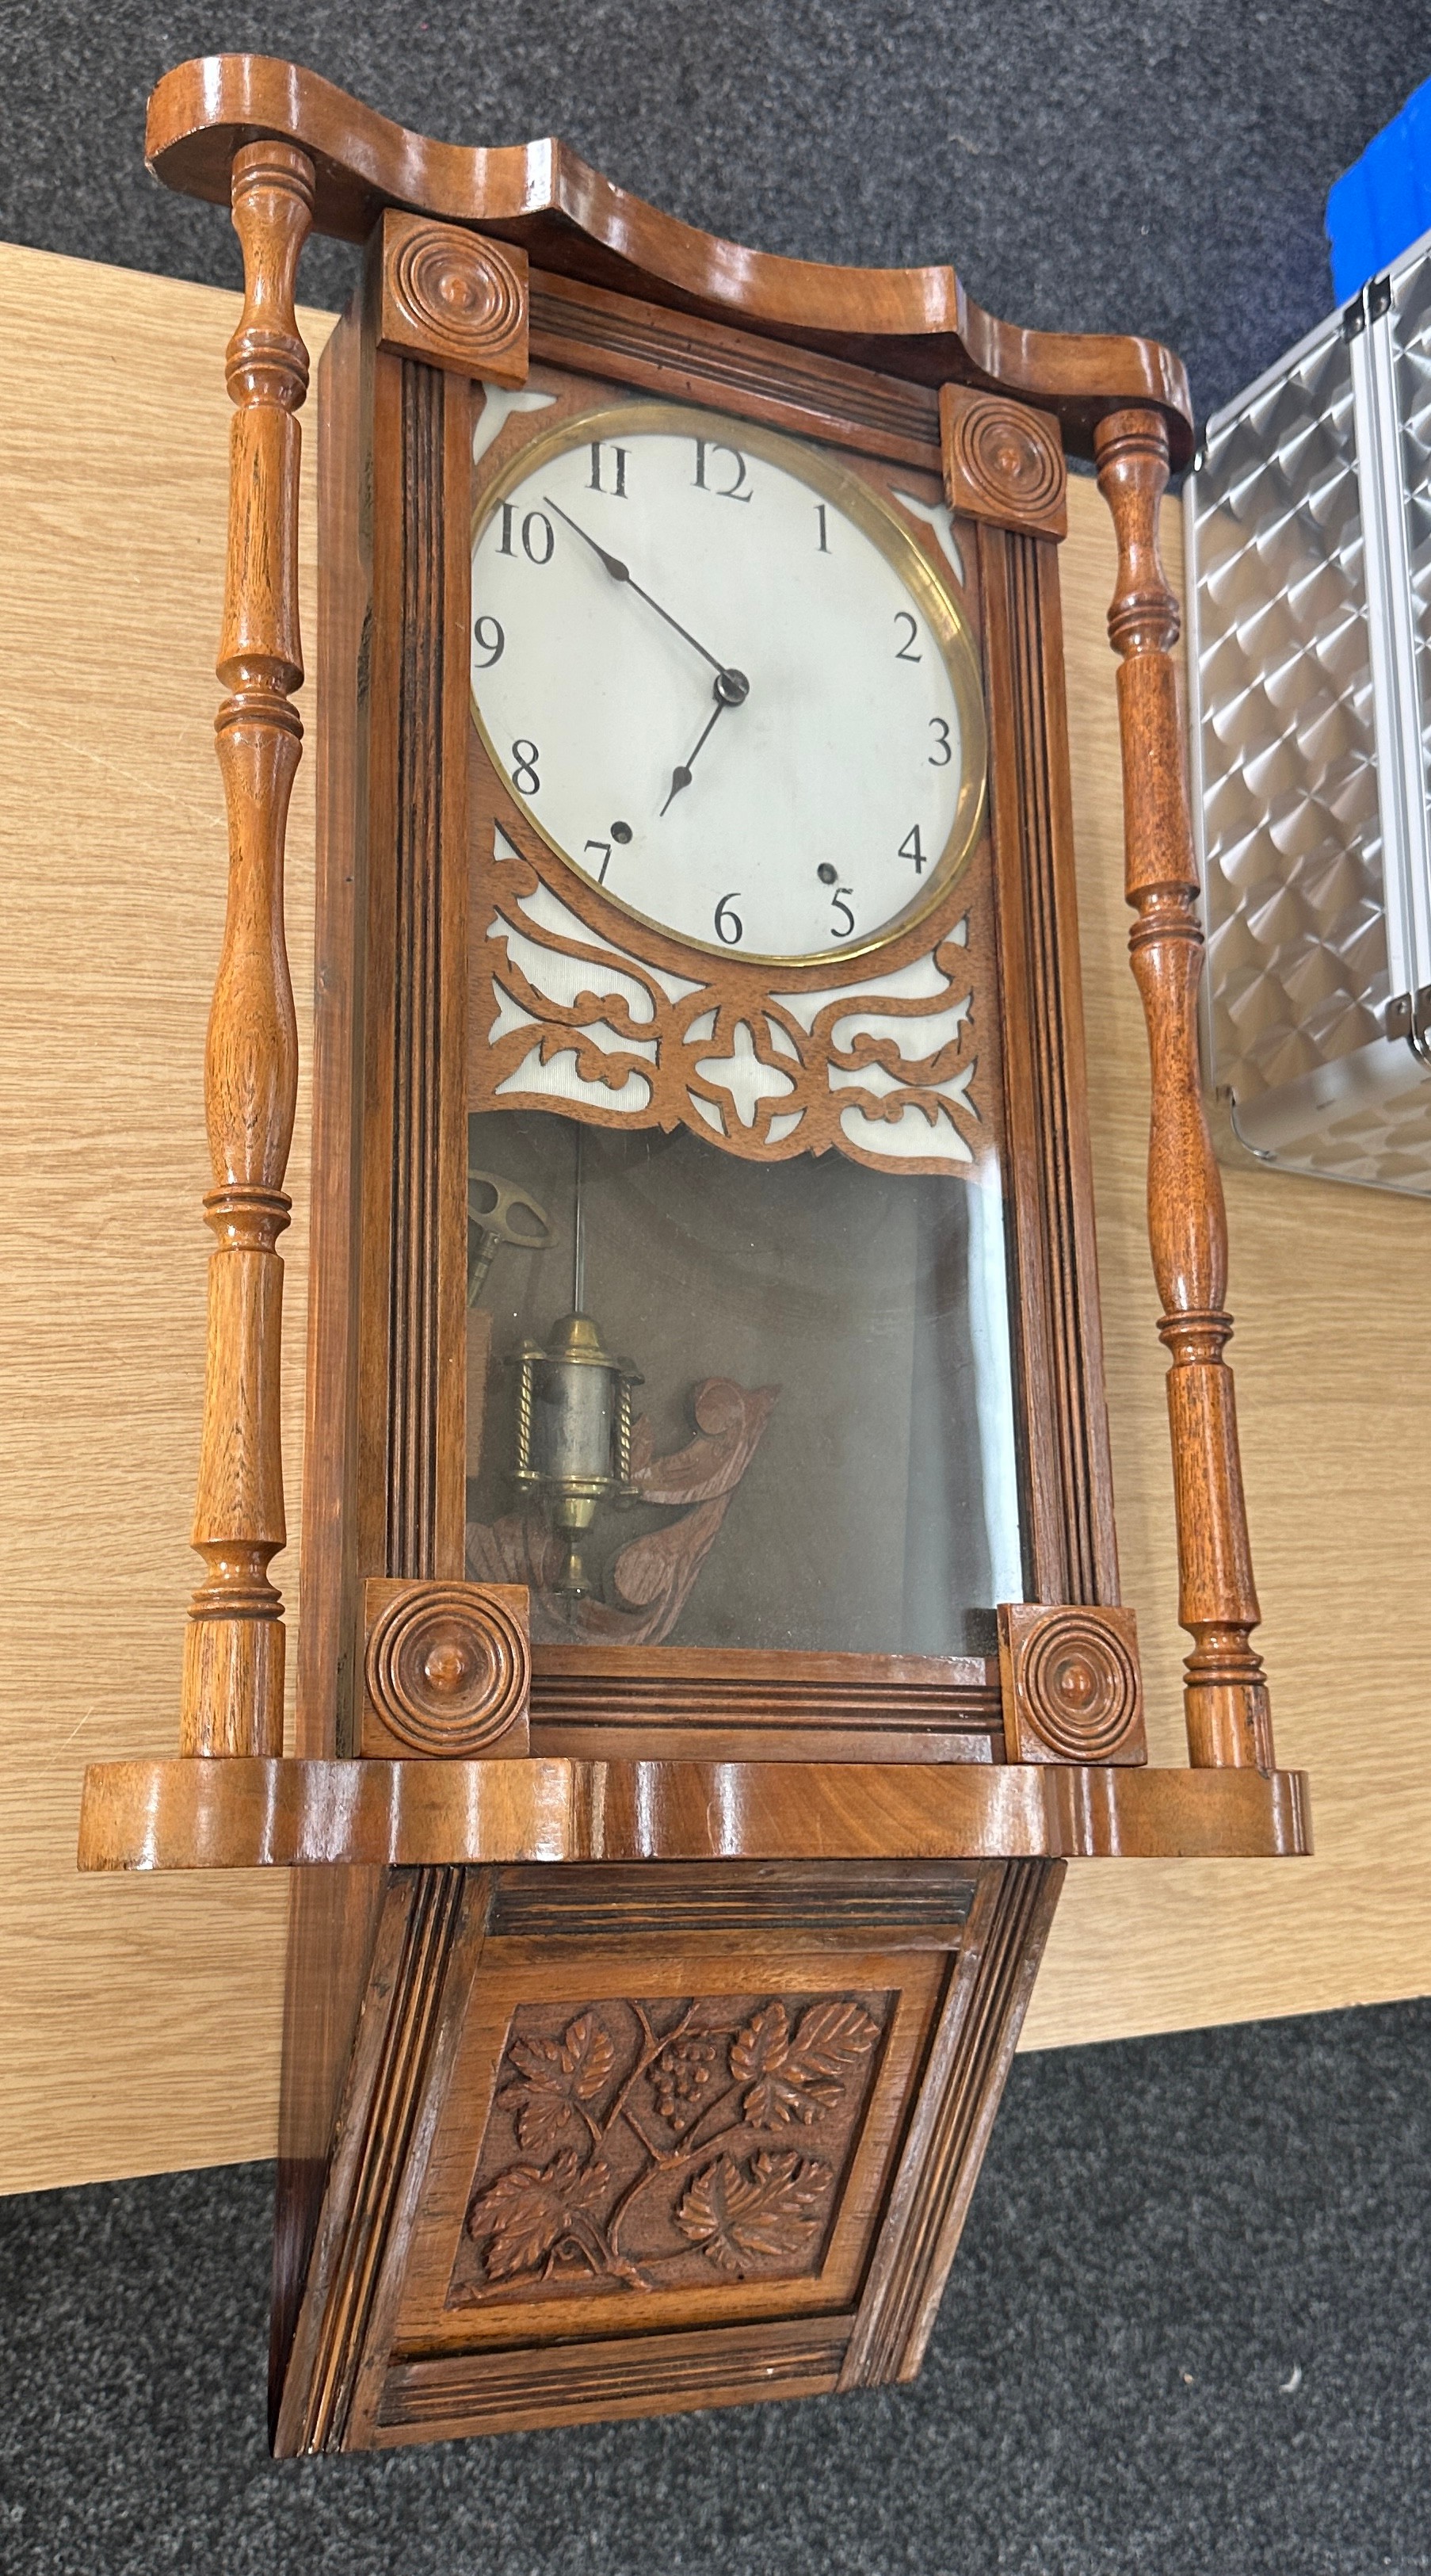 Vintage 3 Key hole wall clock, untested - Image 4 of 4